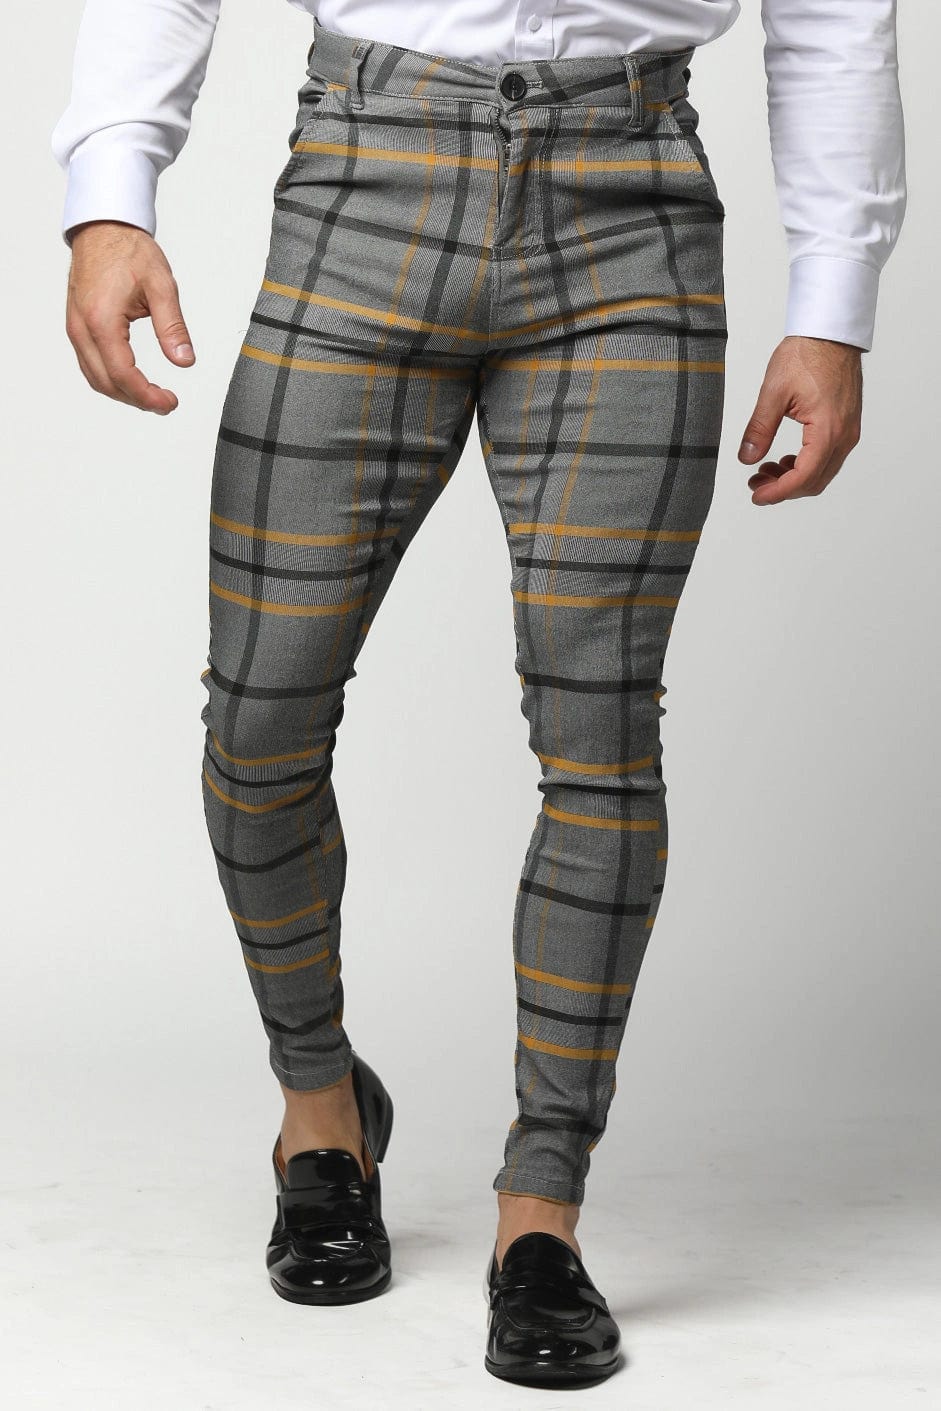 Mens Grey & Yellow Plaid Pants